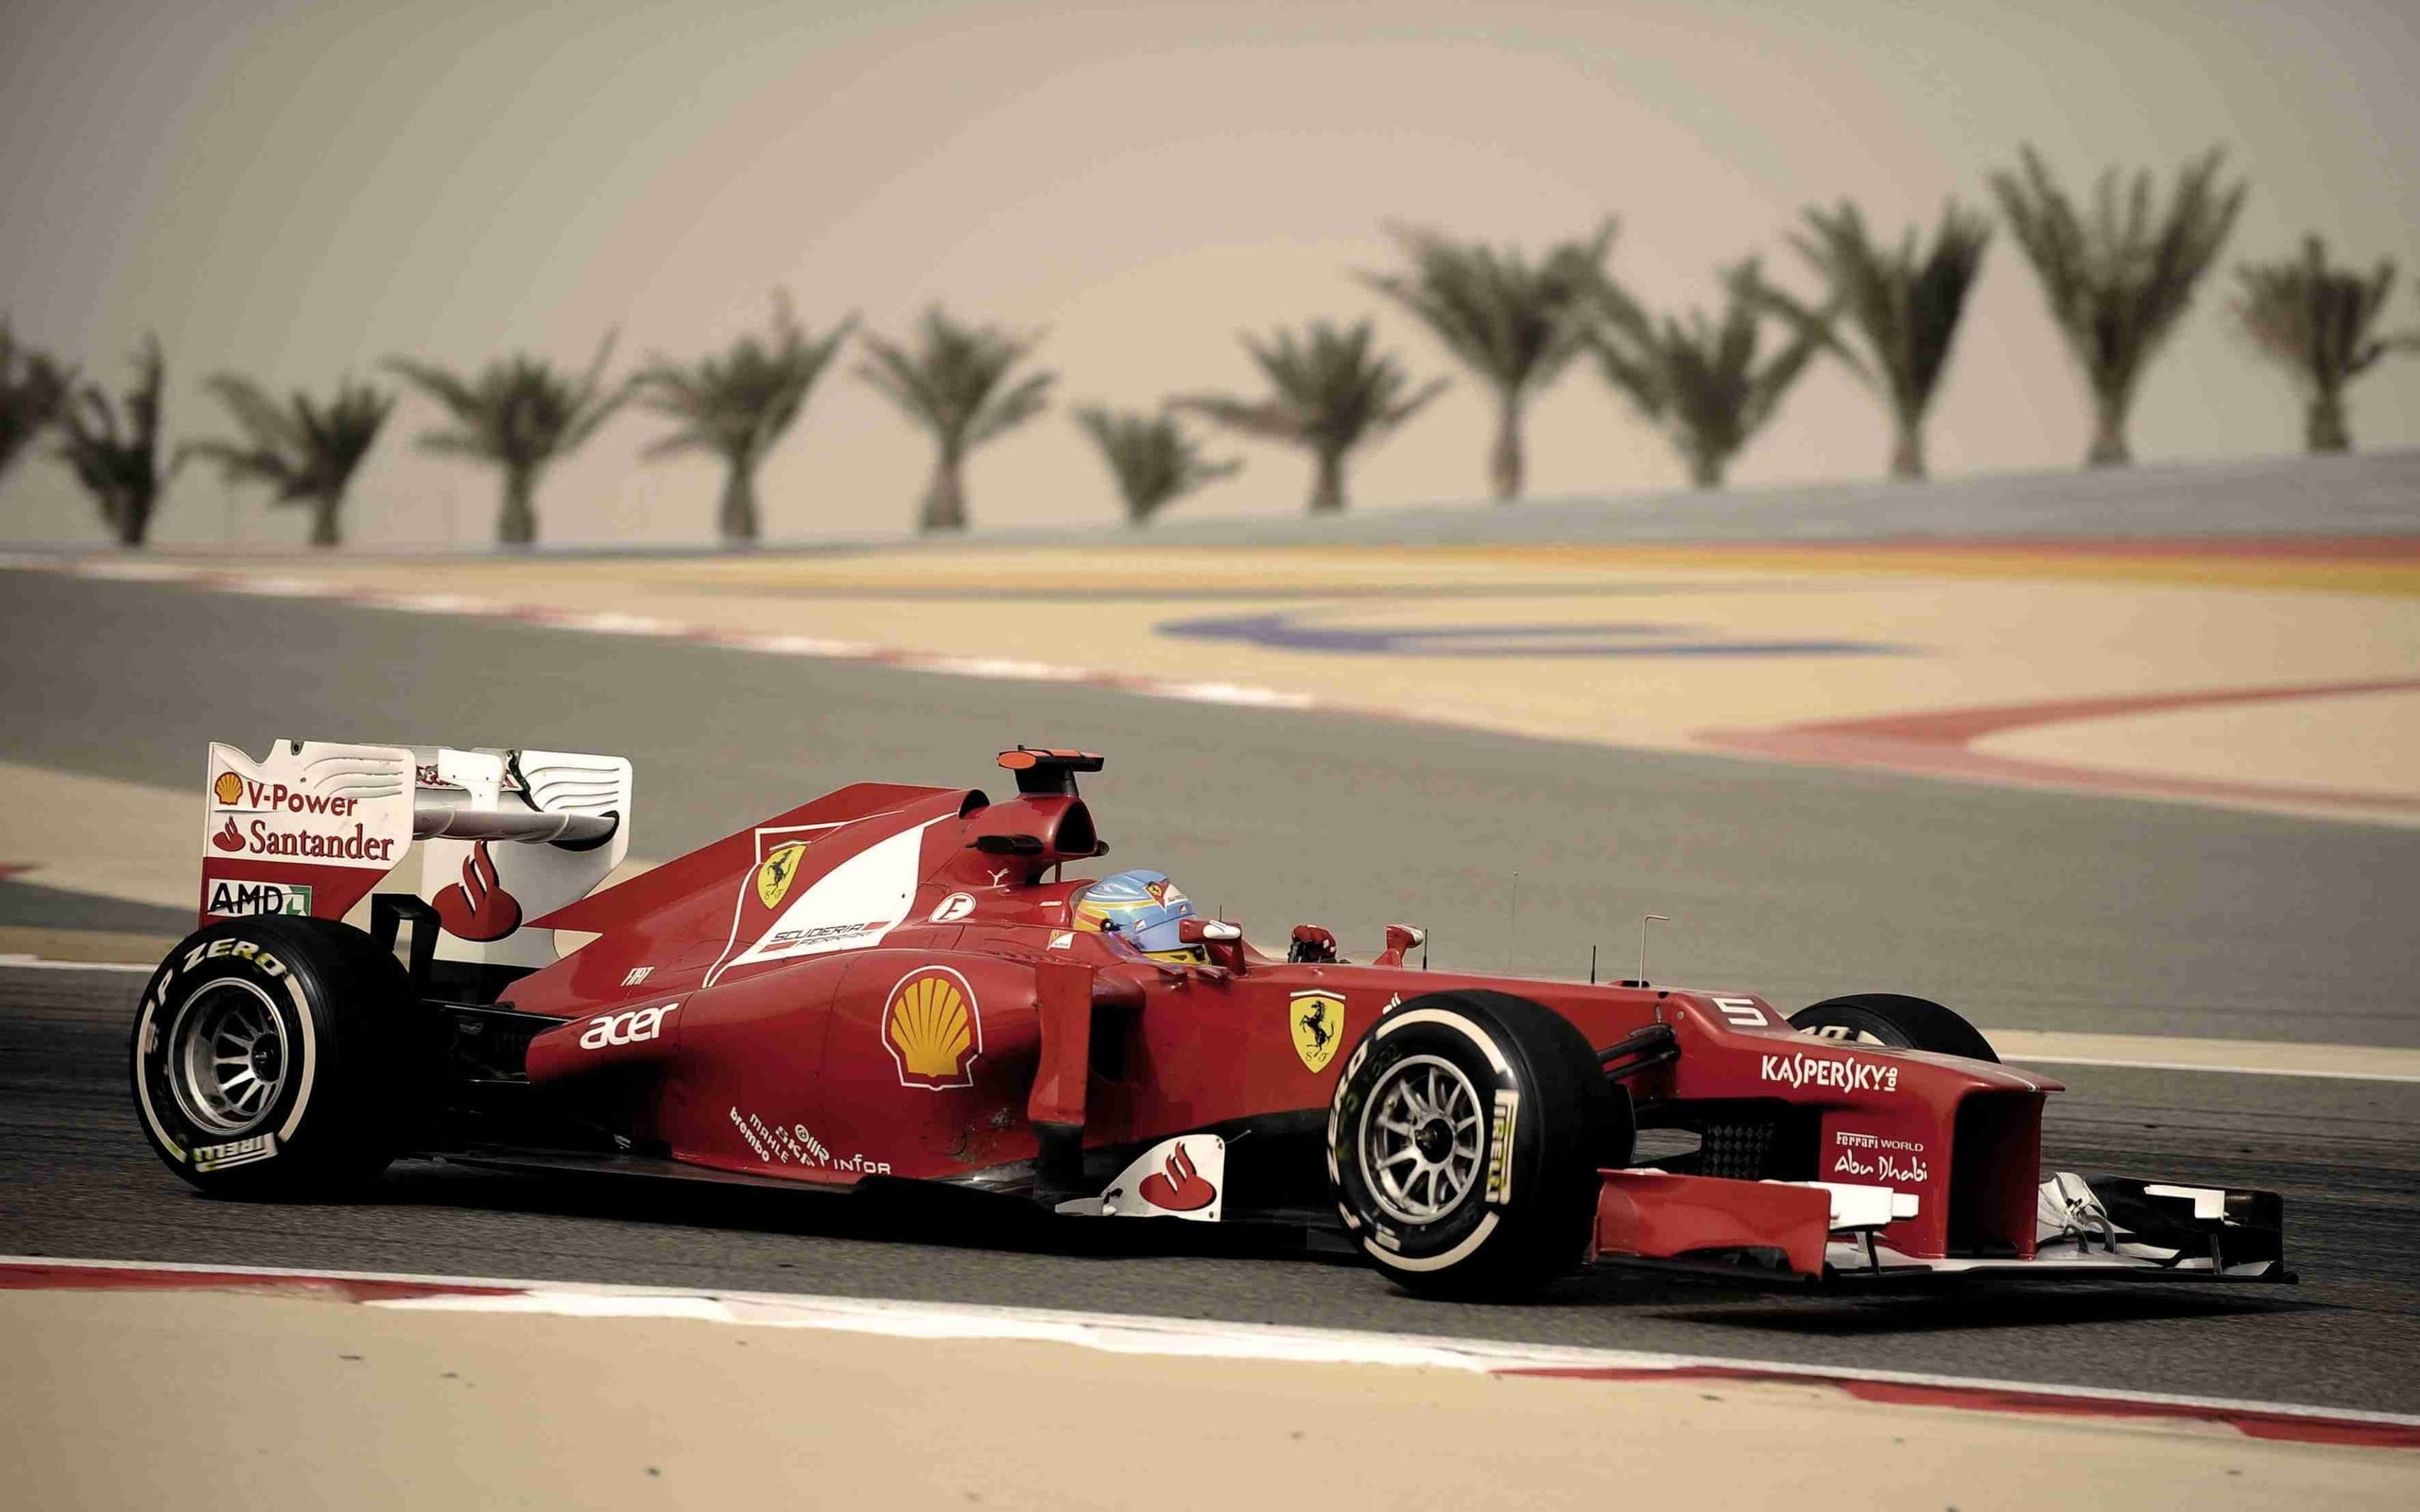 2560x Red Ferrari F1 Race Car On Race Track During F1 Car